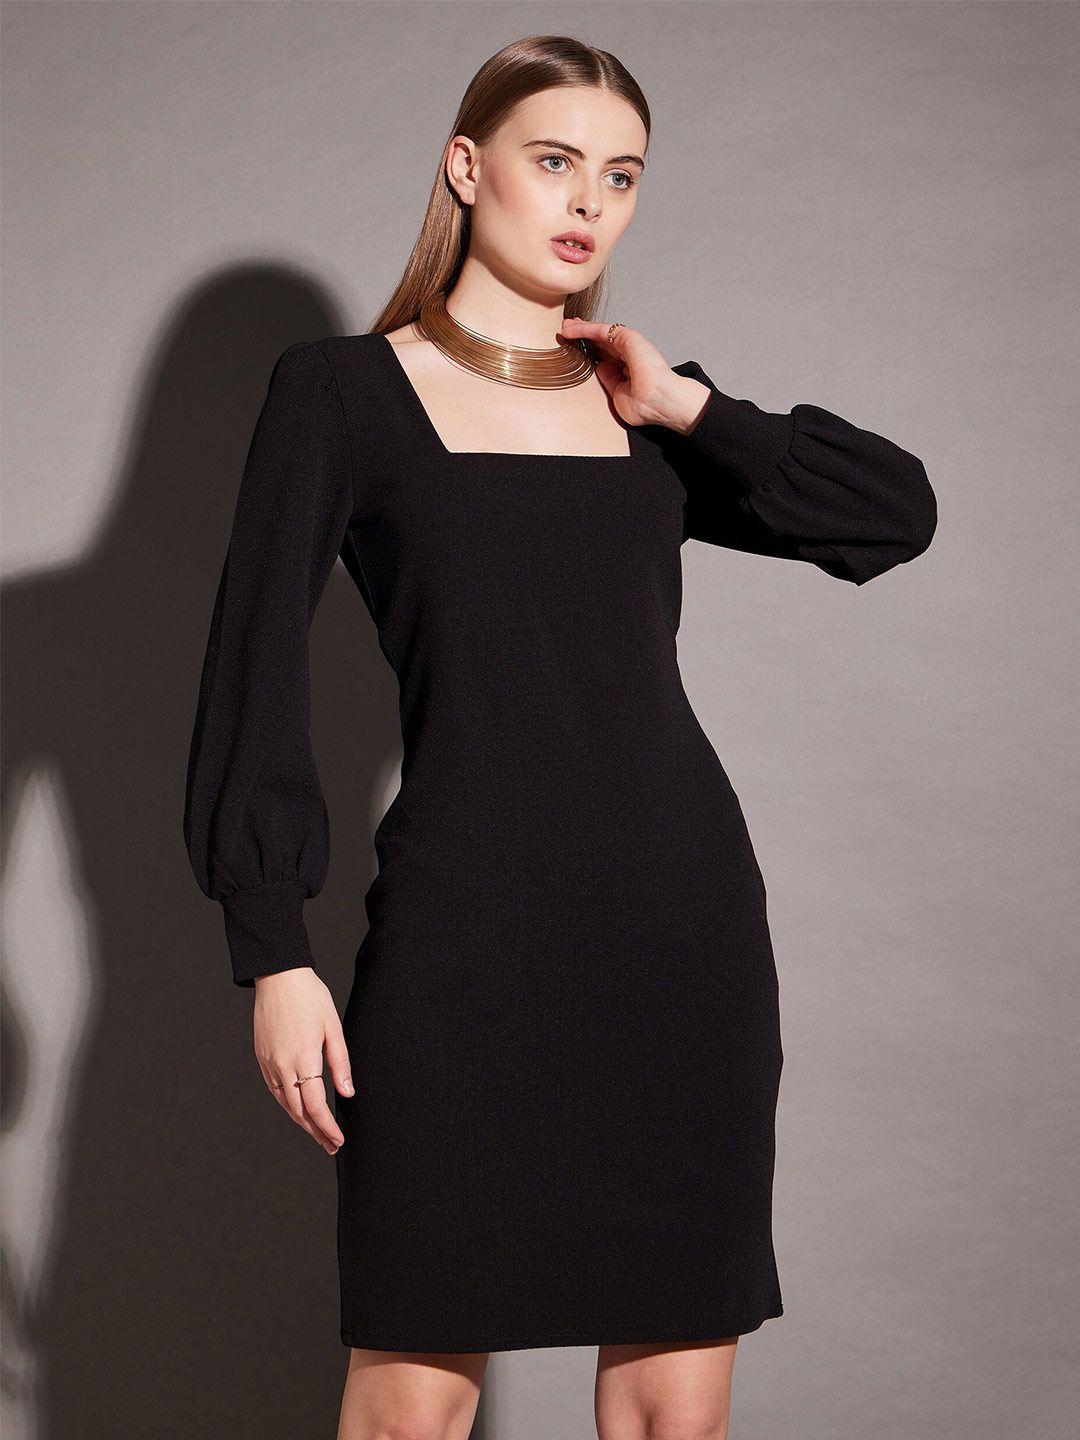 mabish-by-sonal-jain-black-dress